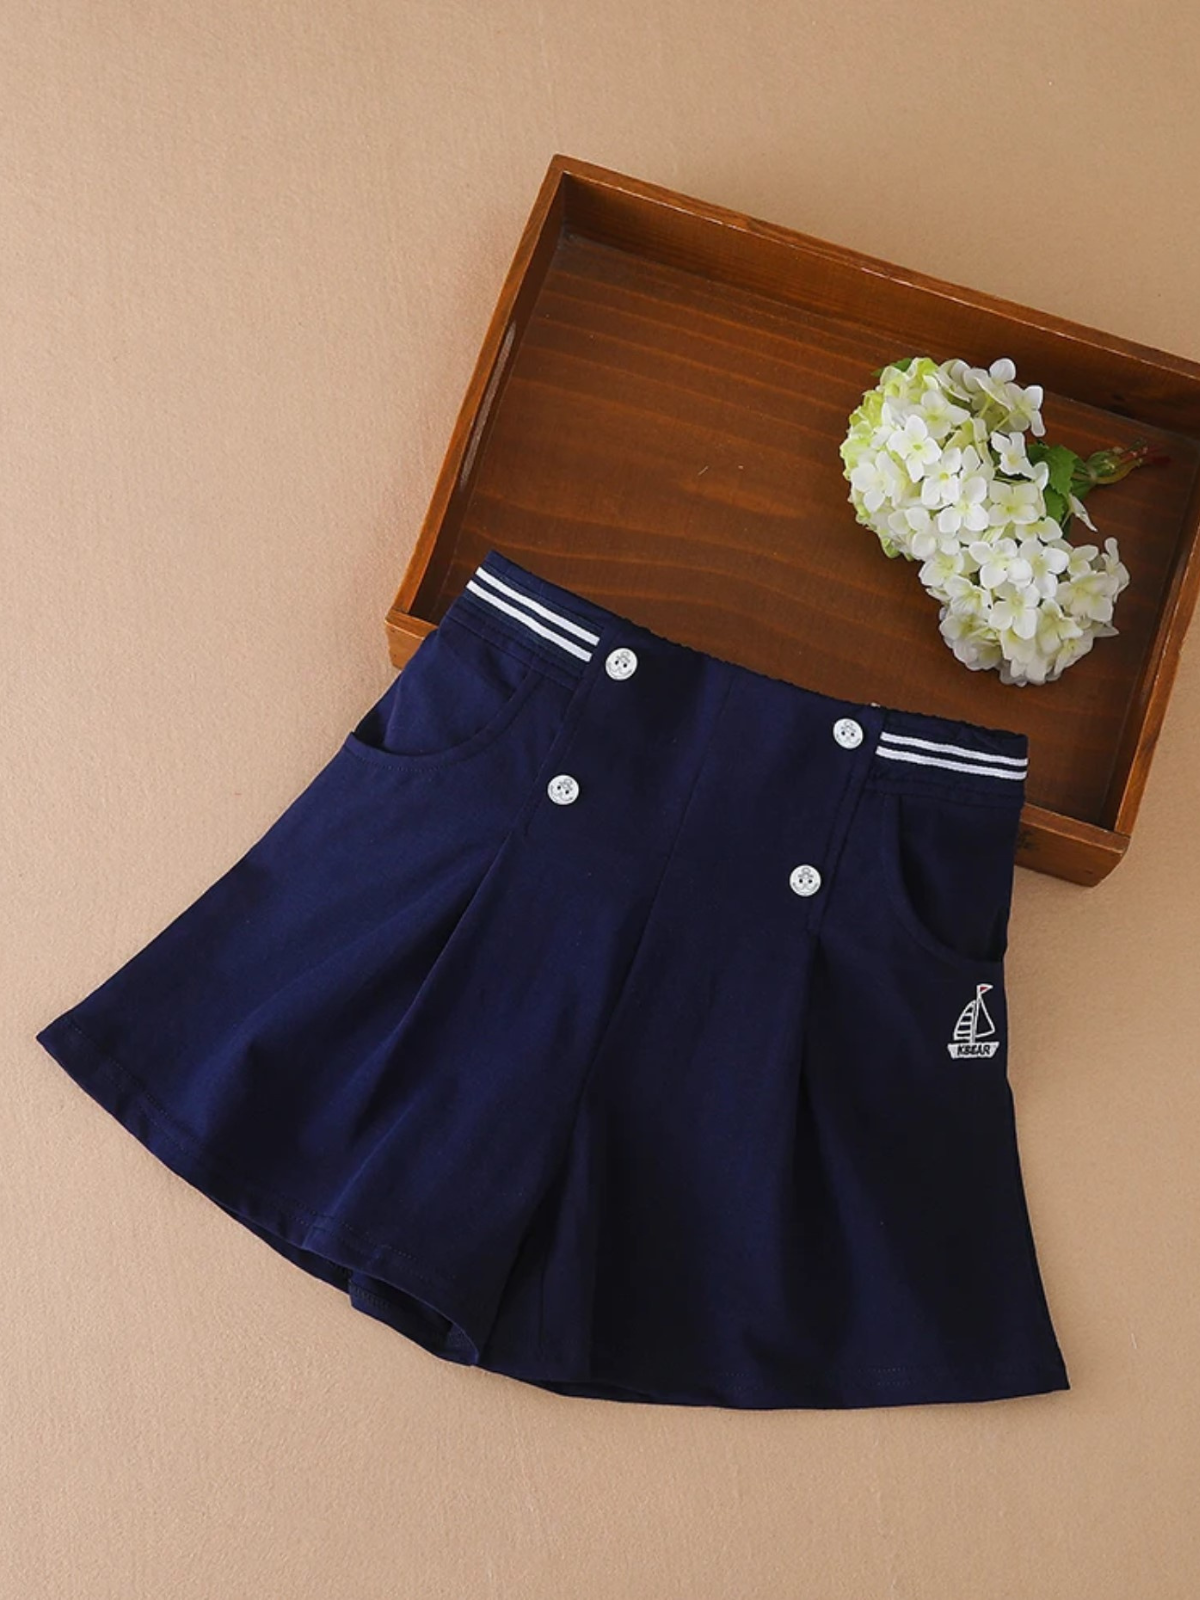 Mia Belle Girls Sailor Shorts | Girls Summer Outfits